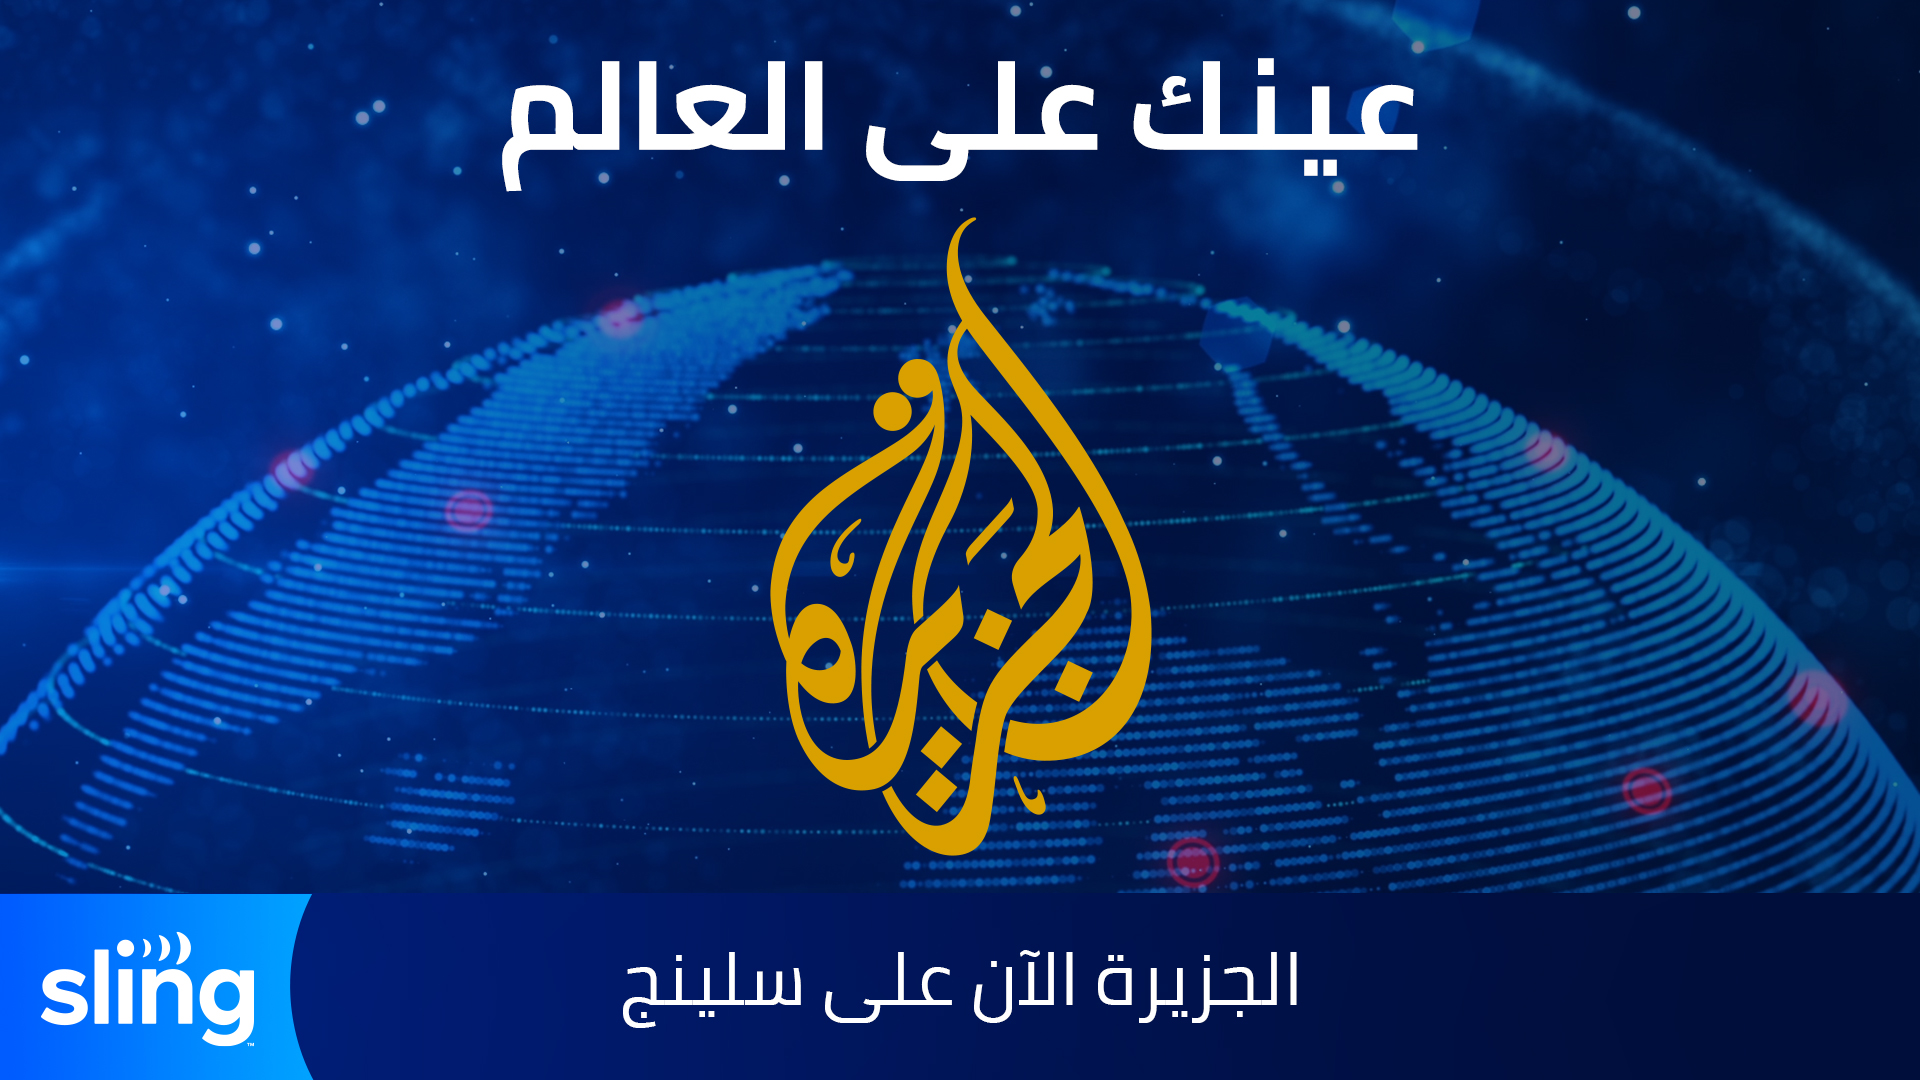 SLING TV Announces Relaunch of Popular Arabic News Channel AL JAZEERA